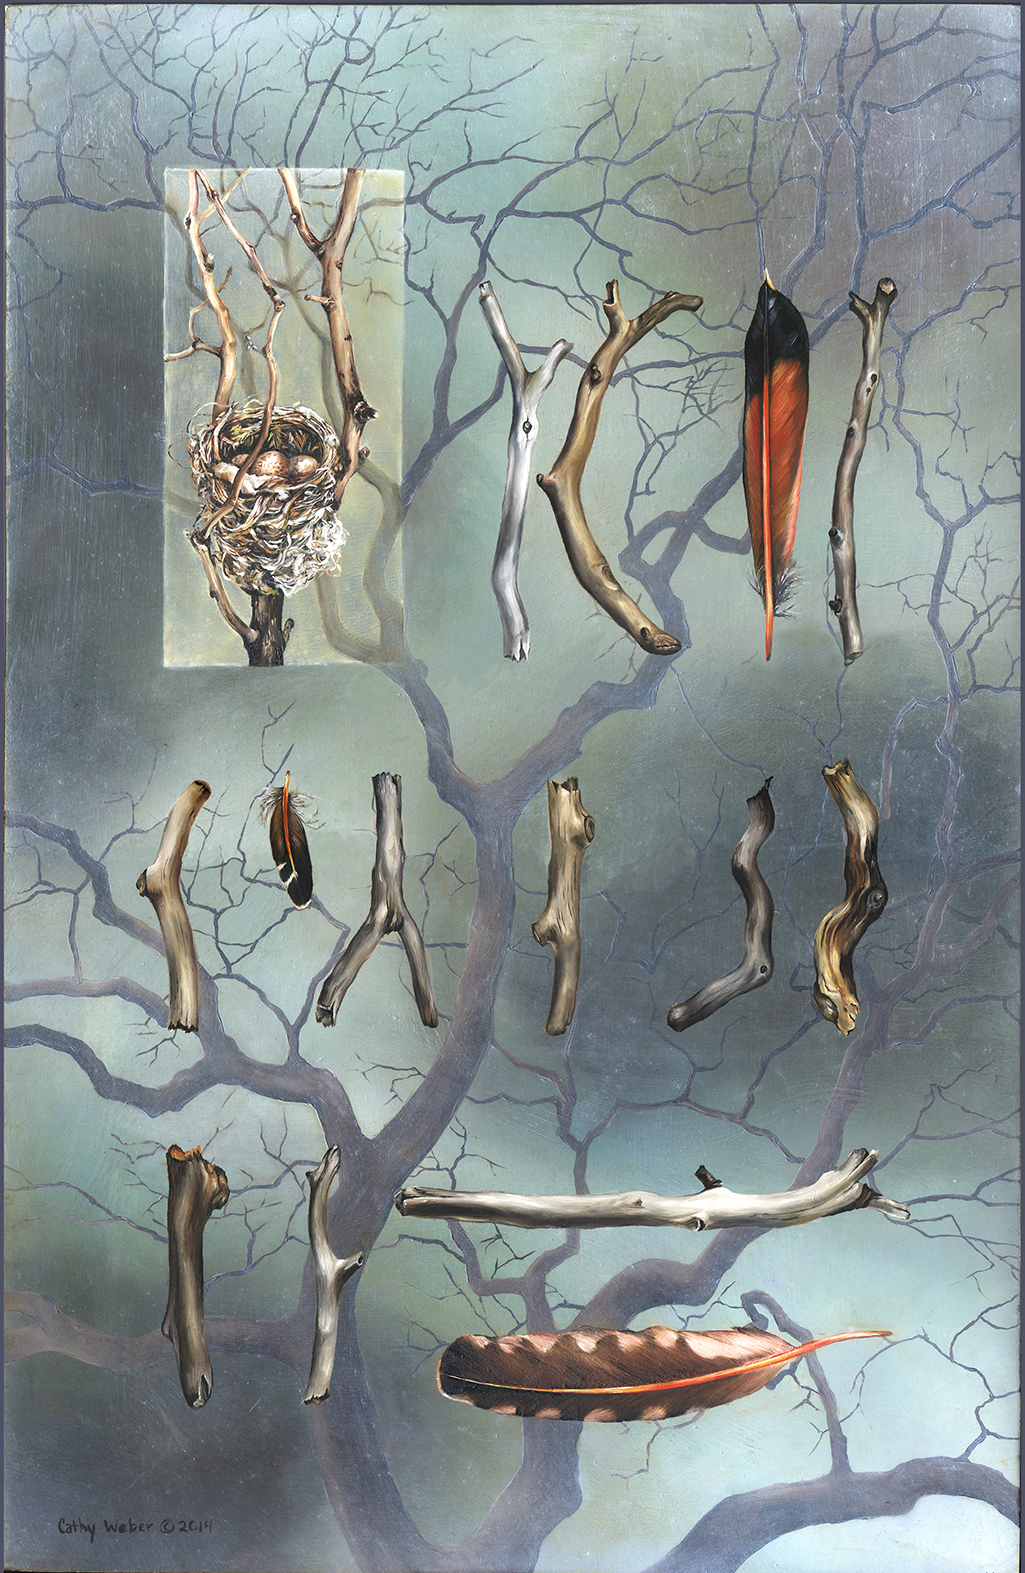 cathy weber - art - oil painting - nest - sticks - feather - object poem - tree - montana